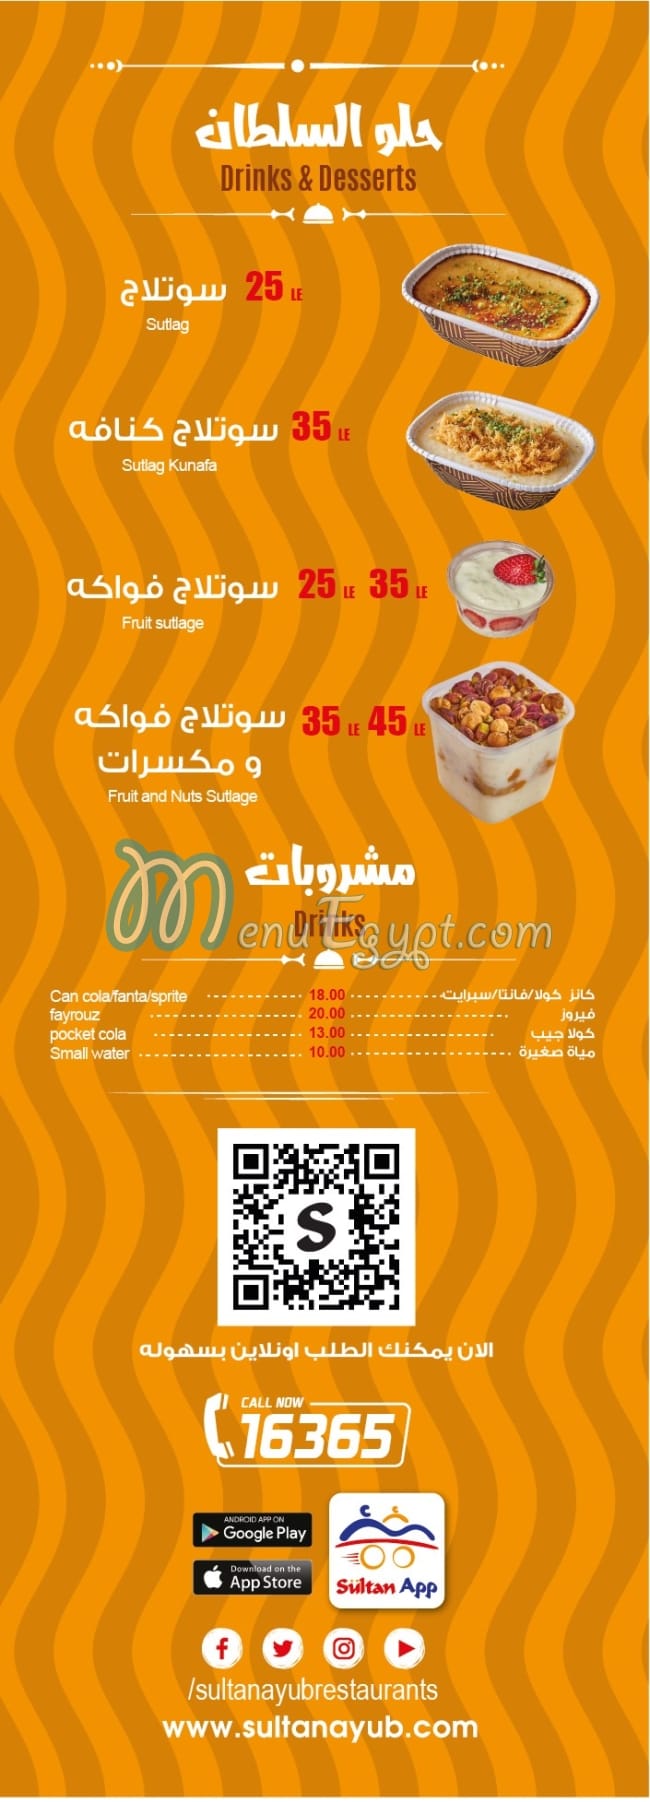 Sultan Ayub menu prices